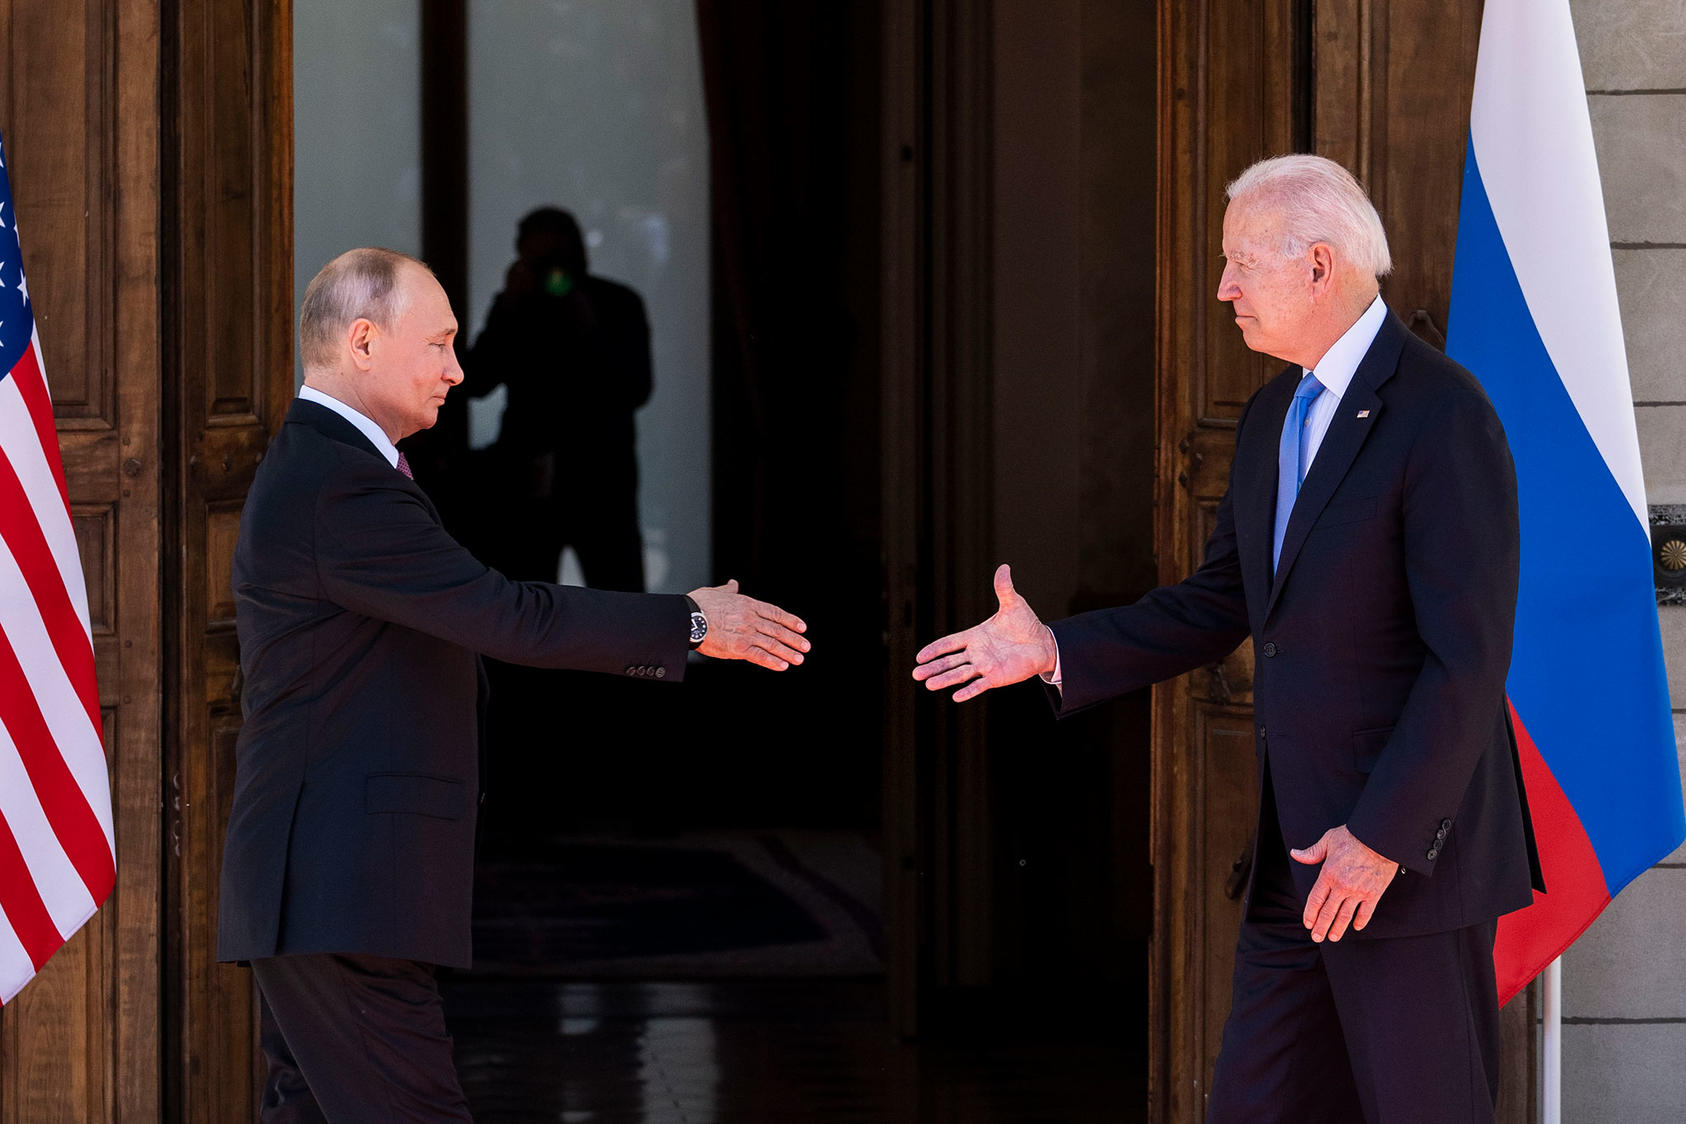 President Joe Biden greets President Vladimir Putin of Russia as they arrive for a meeting in Geneva, June 16, 2021. (Doug Mills/The New York Times)